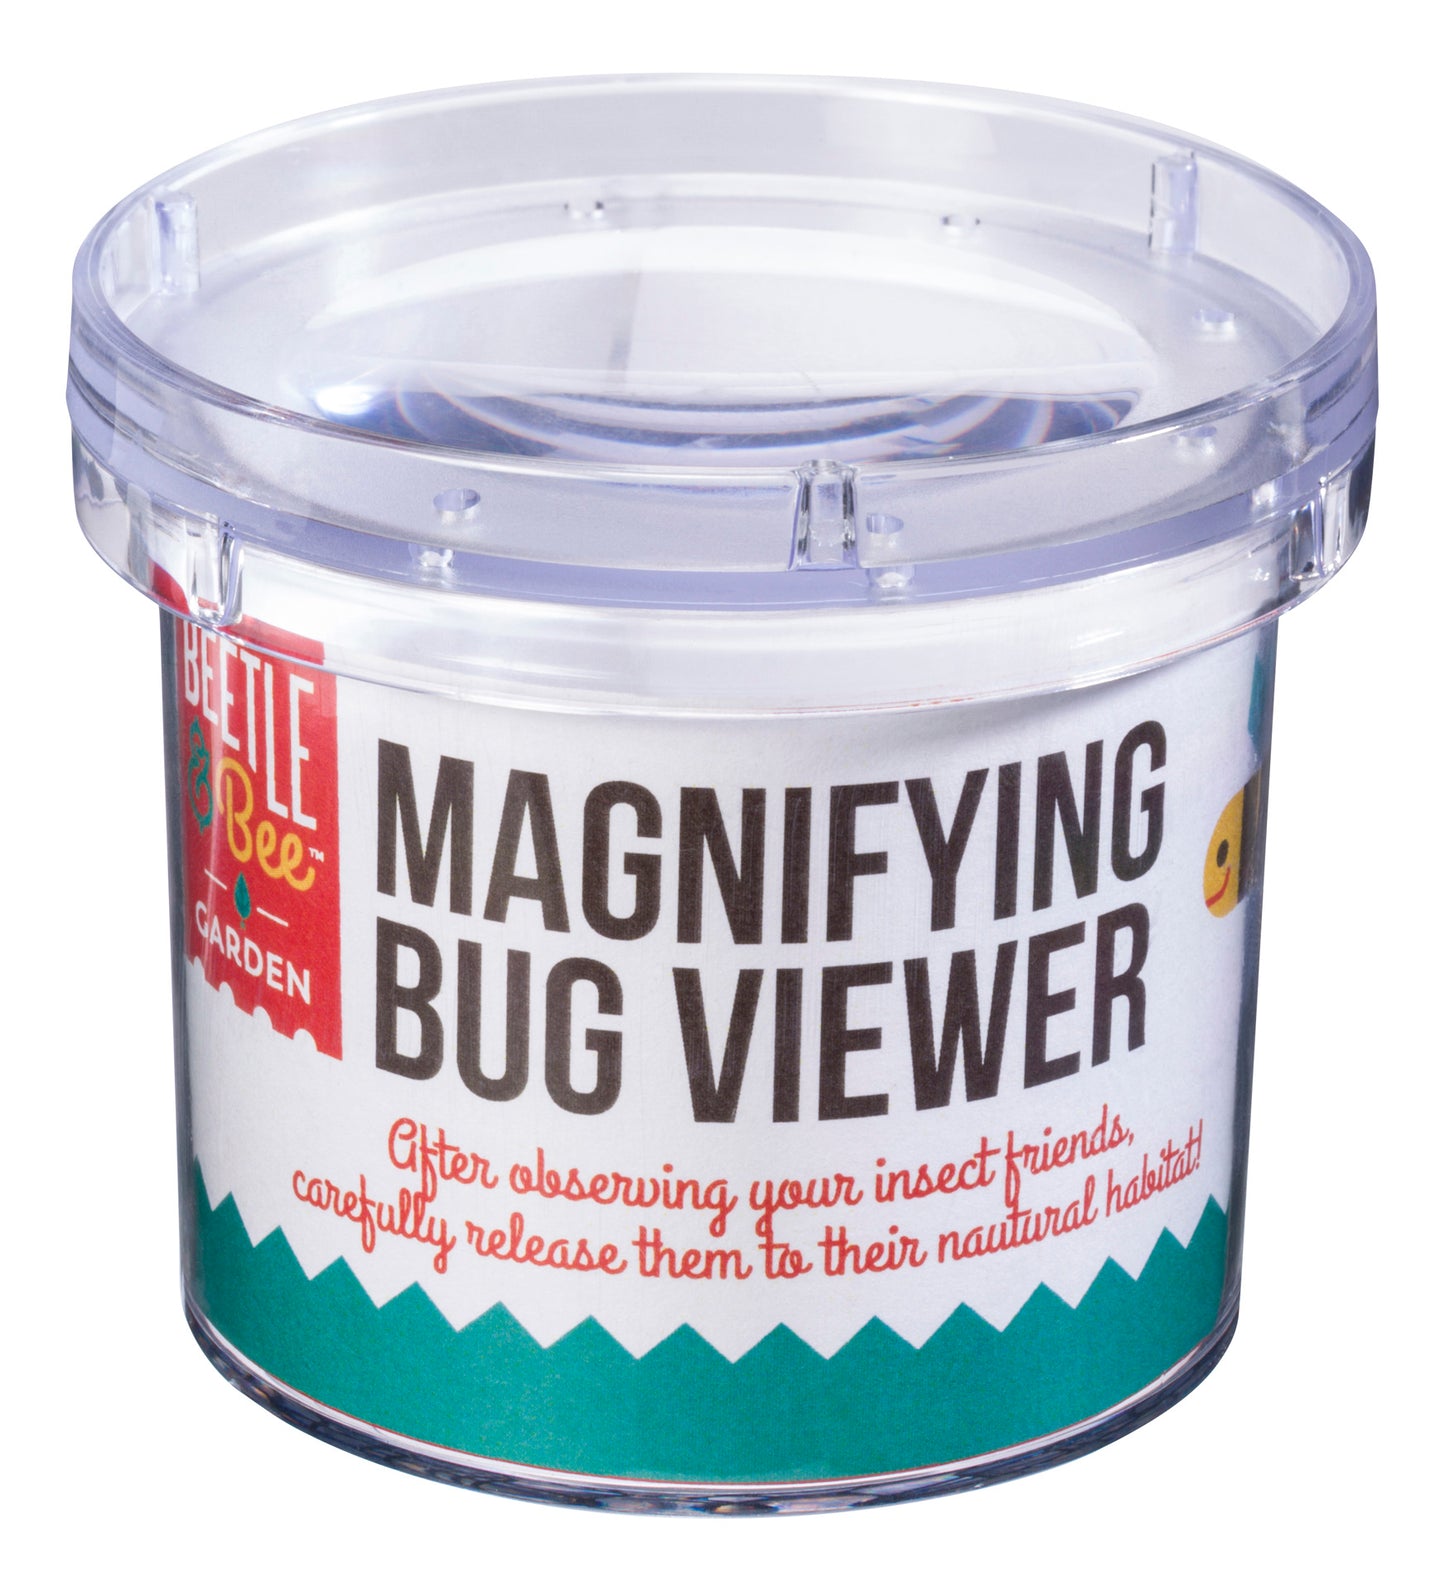 Beetle & Bee Garden Magnifying Bug Viewer